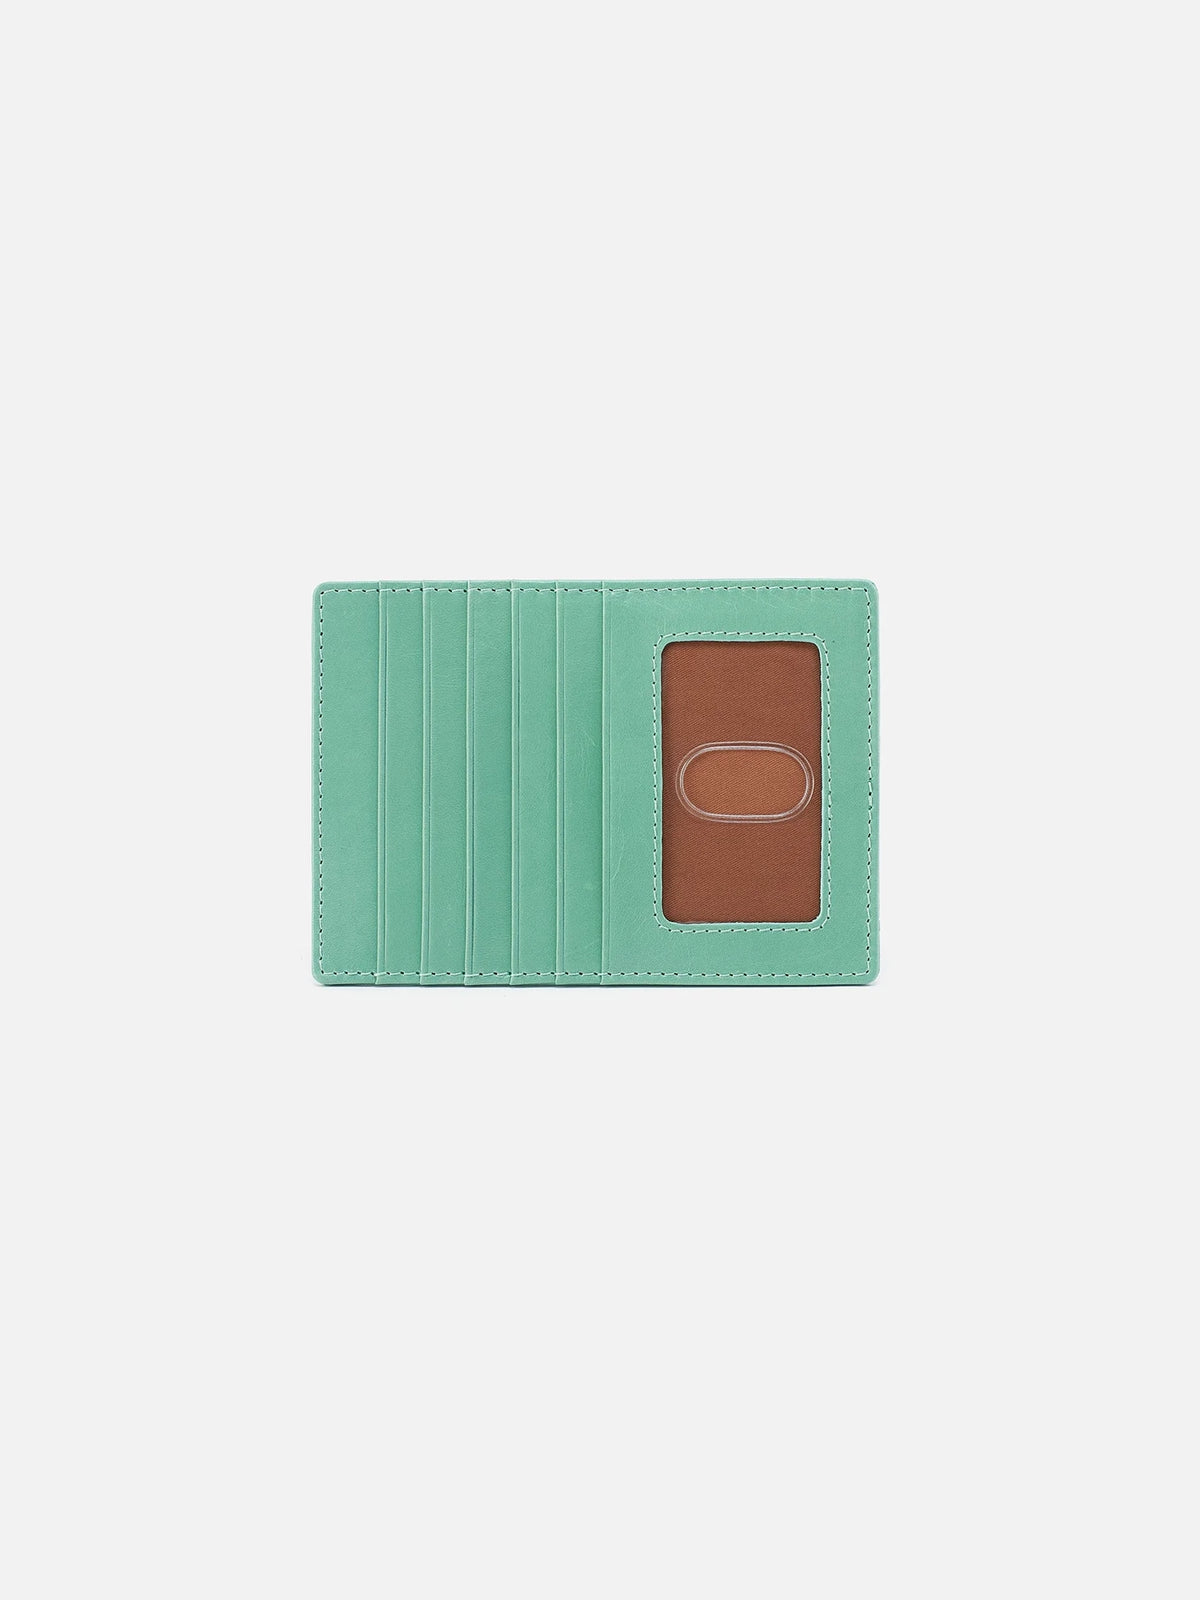 hobo euro slide card case holder in seaglass polished leather